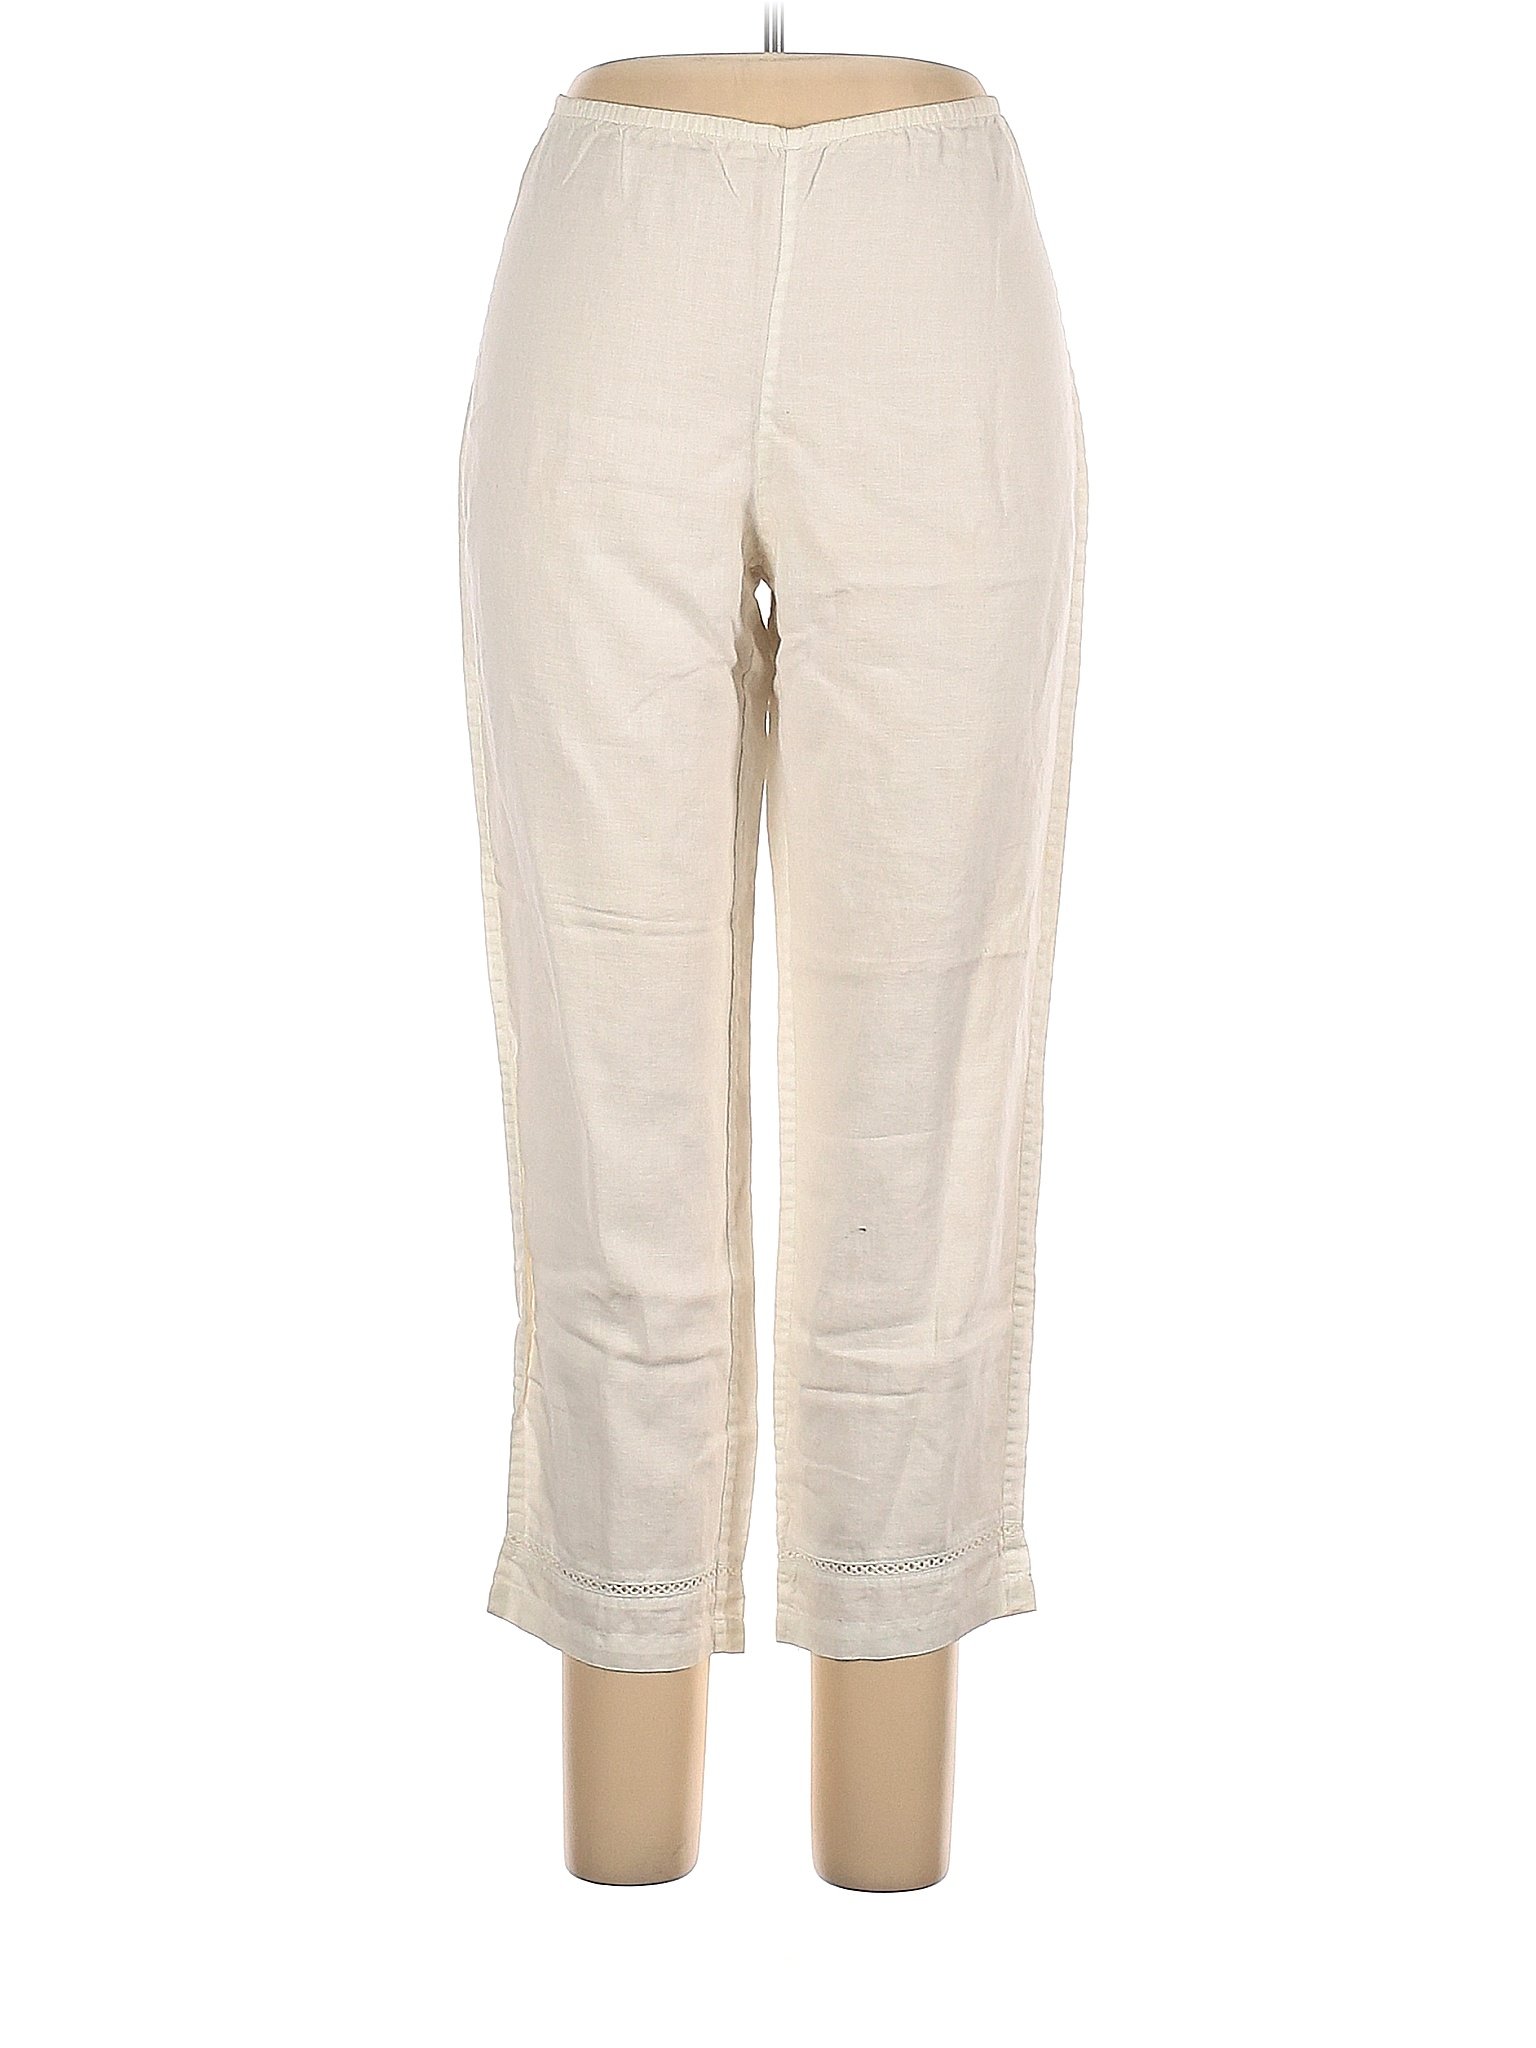 Magaschoni 100% Linen Ivory Linen Pants Size M - 81% off | thredUP